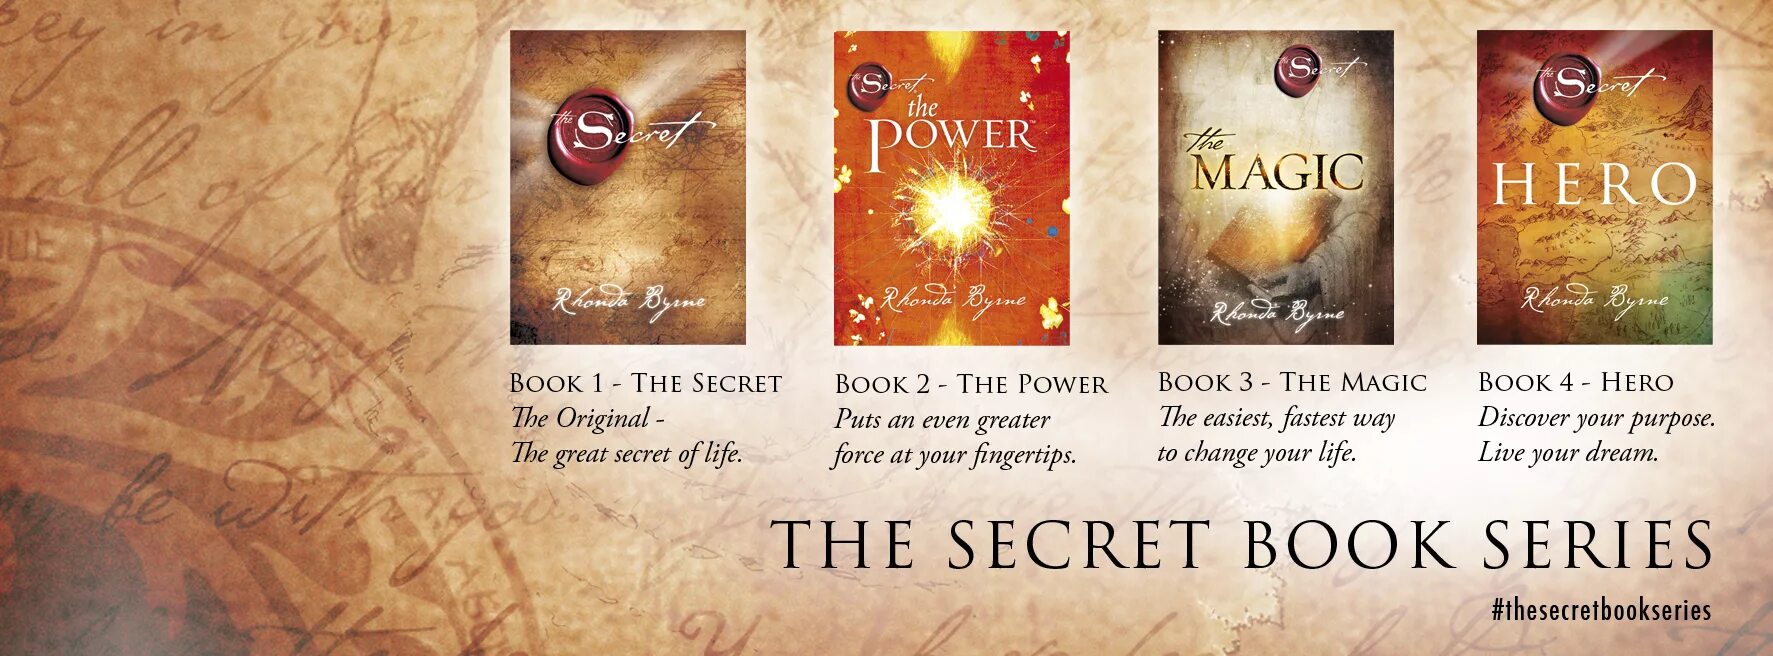 Https secret in book. Книга Secret. Книги с секретом. Книга секрет Ронда Берн. The book of Secrets.